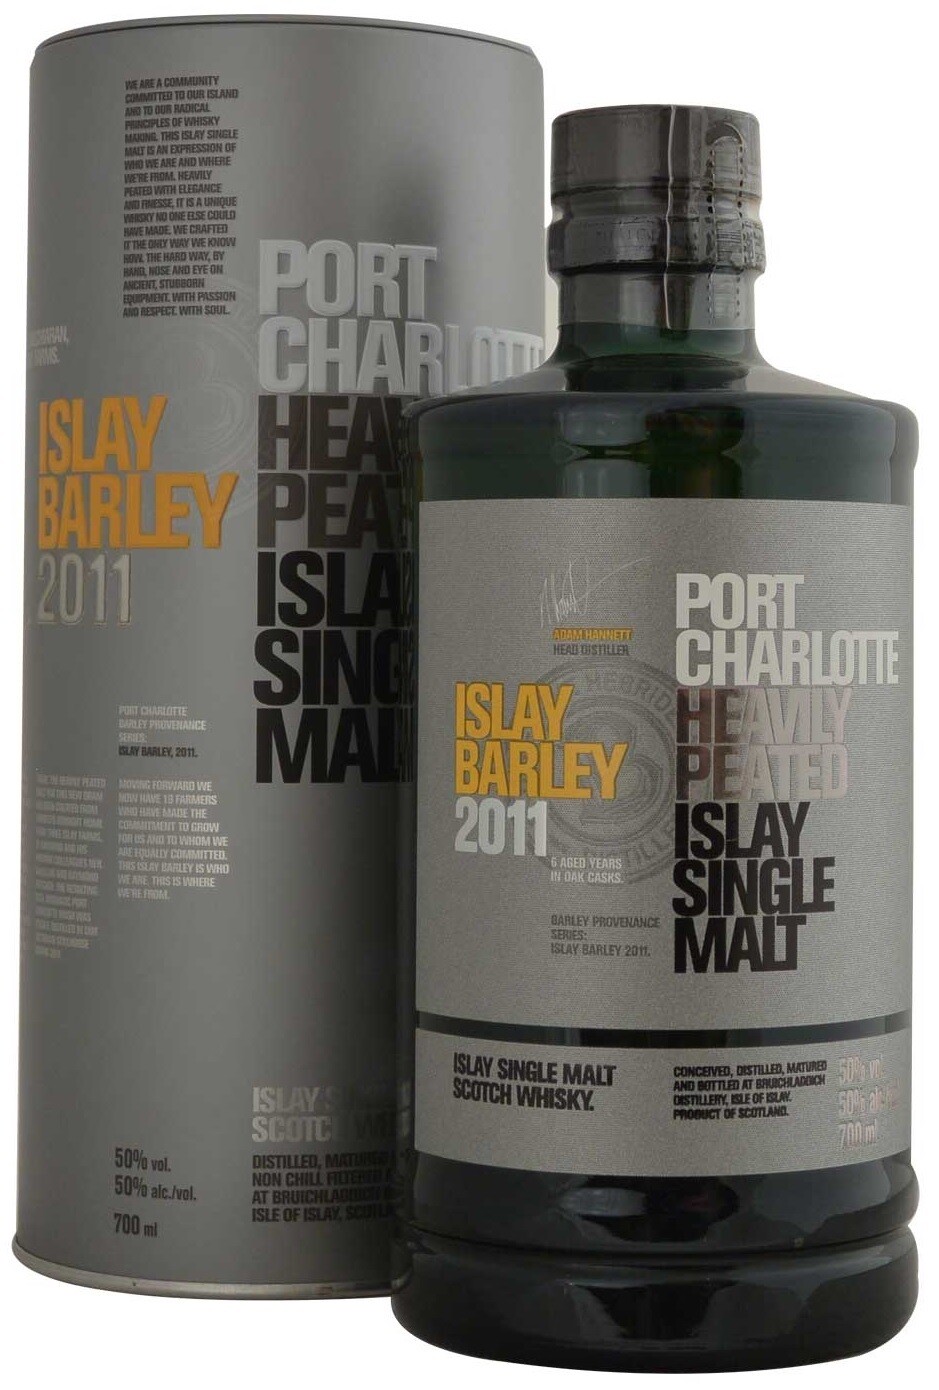 Whisky - Port Charlotte - Islay Barley - 2011 - 50% - 70cl